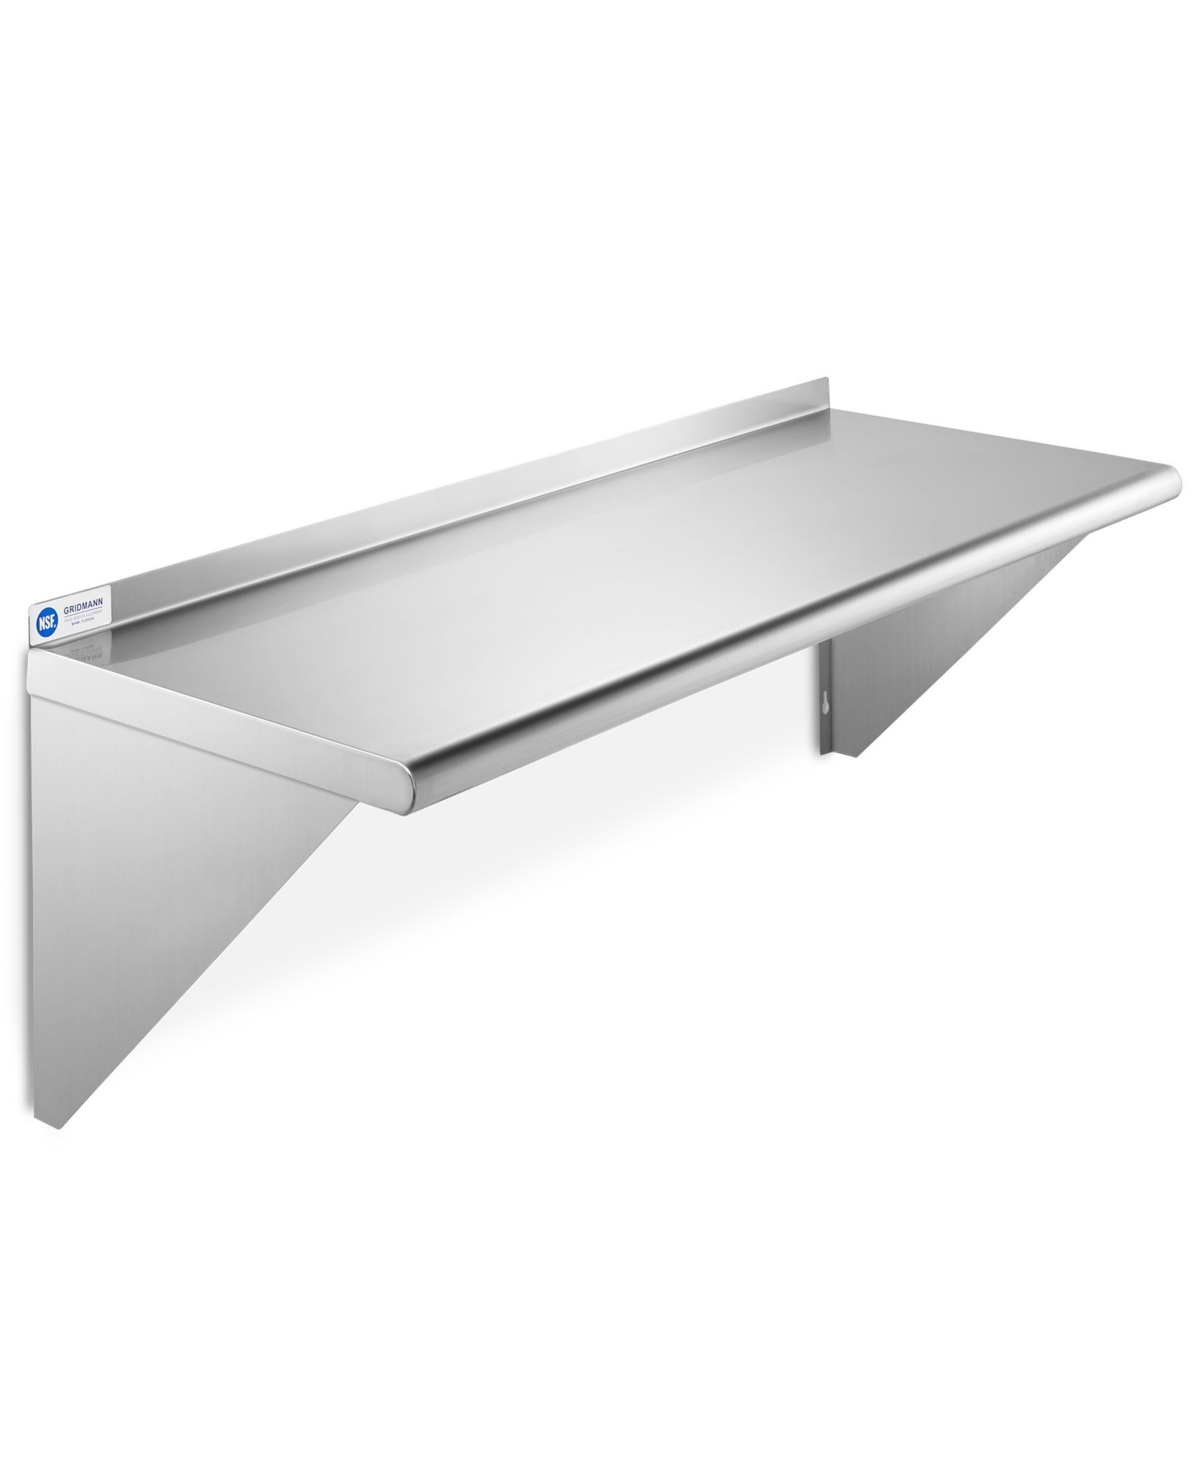 14" x 36" Nsf Stainless Steel Kitchen Wall Mount Shelf w/ Backsplash - Silver